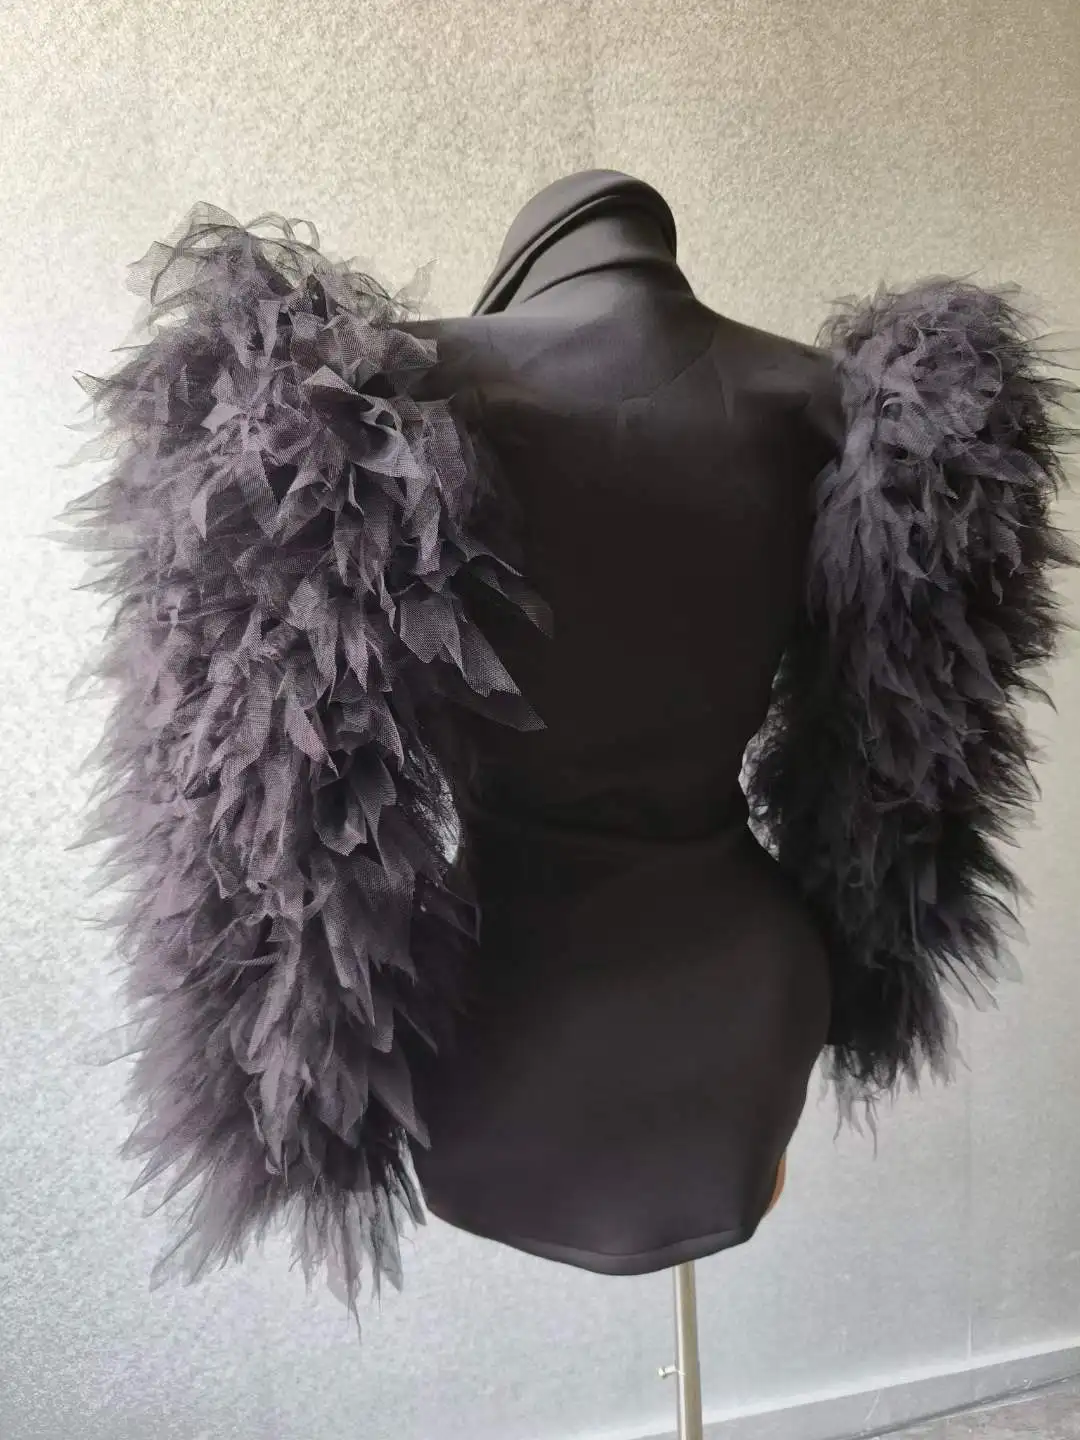 Black Puffy Women Blazer Design Long Sleeve Zipper Night Bar Nightclub Party Birthday Queen Costume Stretch Drag Outfit